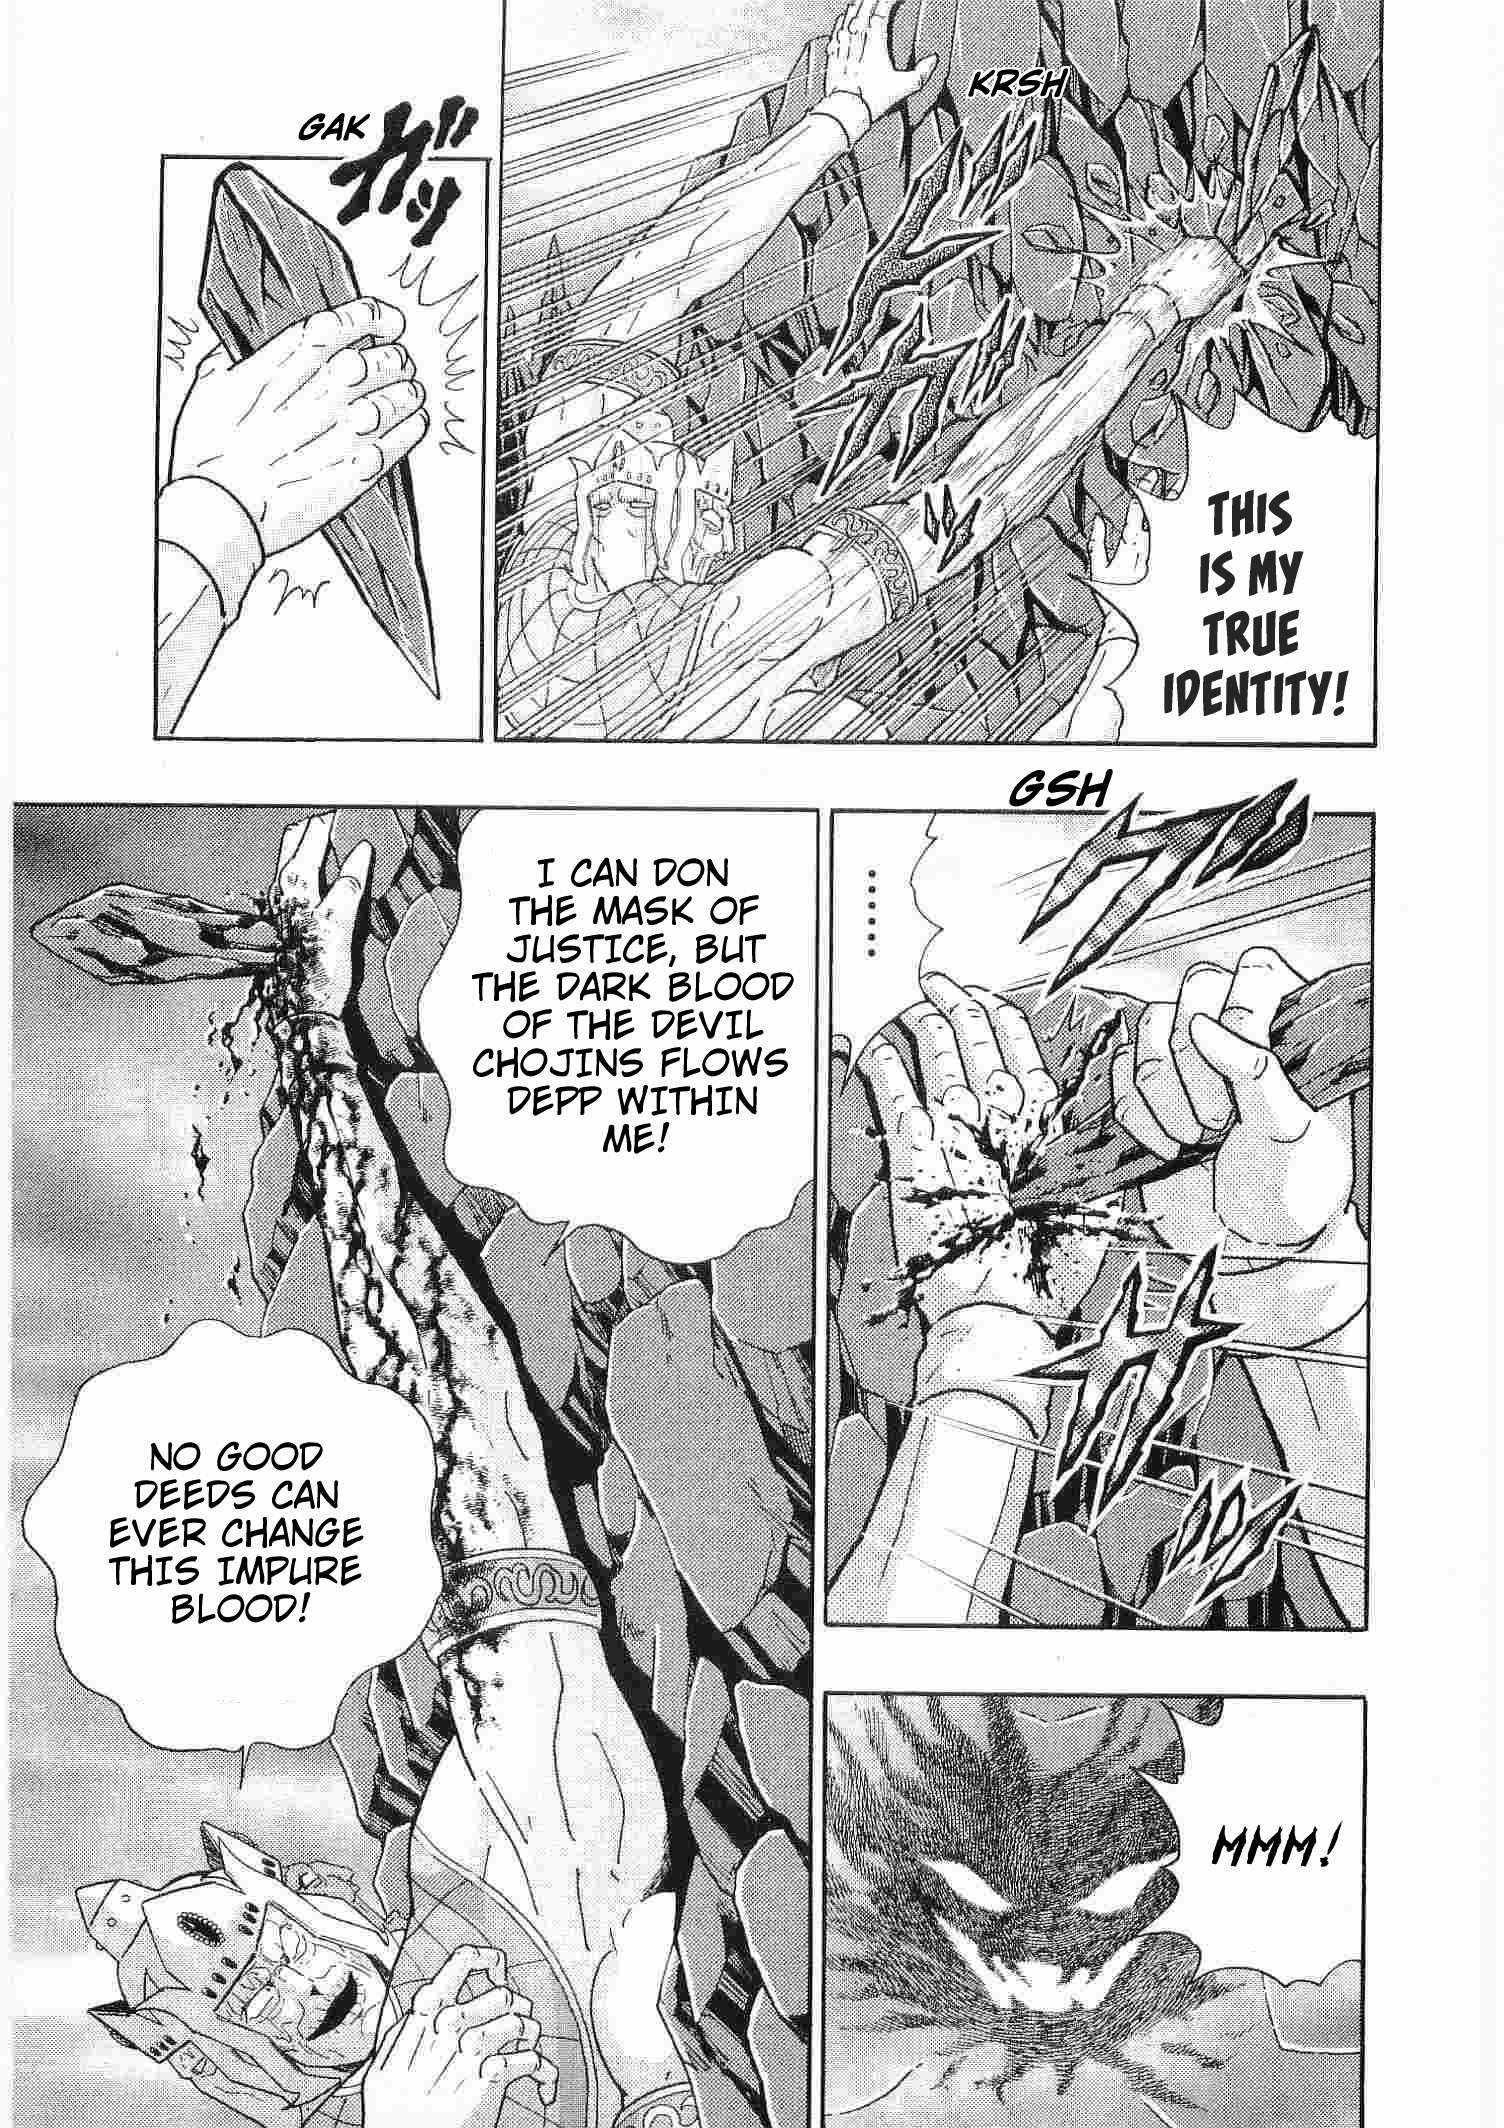 Kinnikuman II Sei - 2nd Generation - chapter 293 - #3